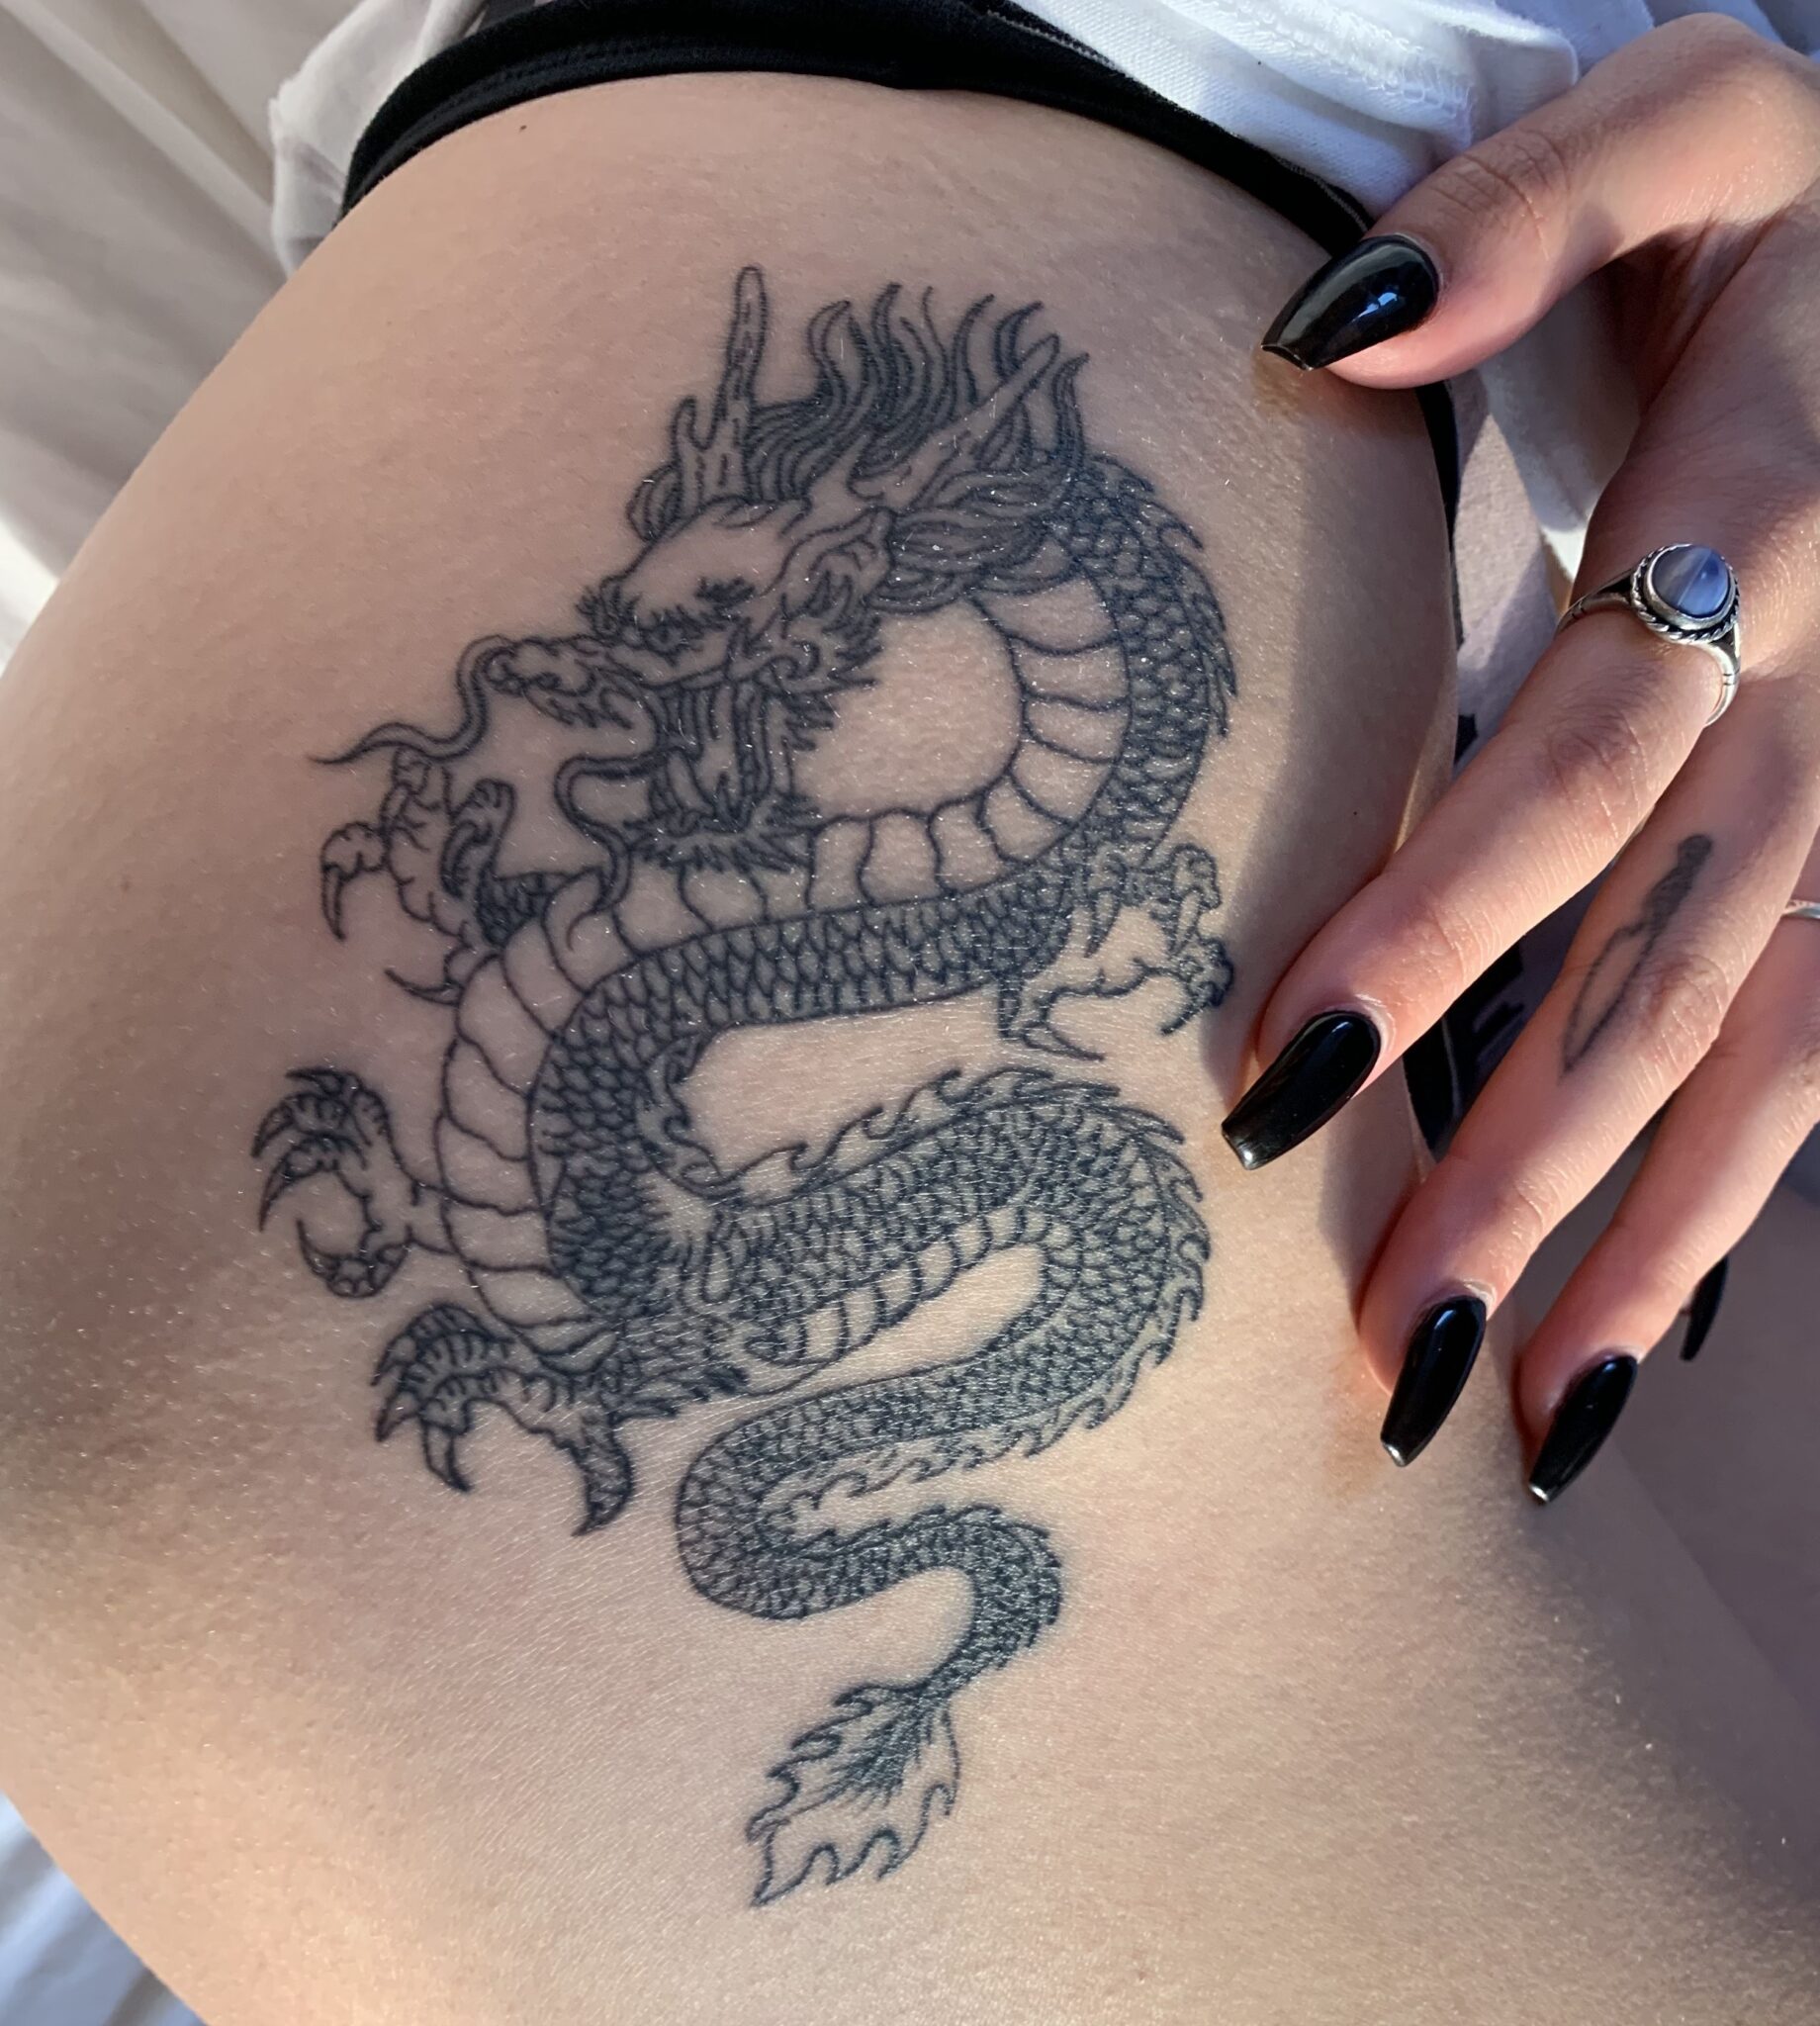 Fierce and powerful dragon tattoo images - Body Tattoo Art